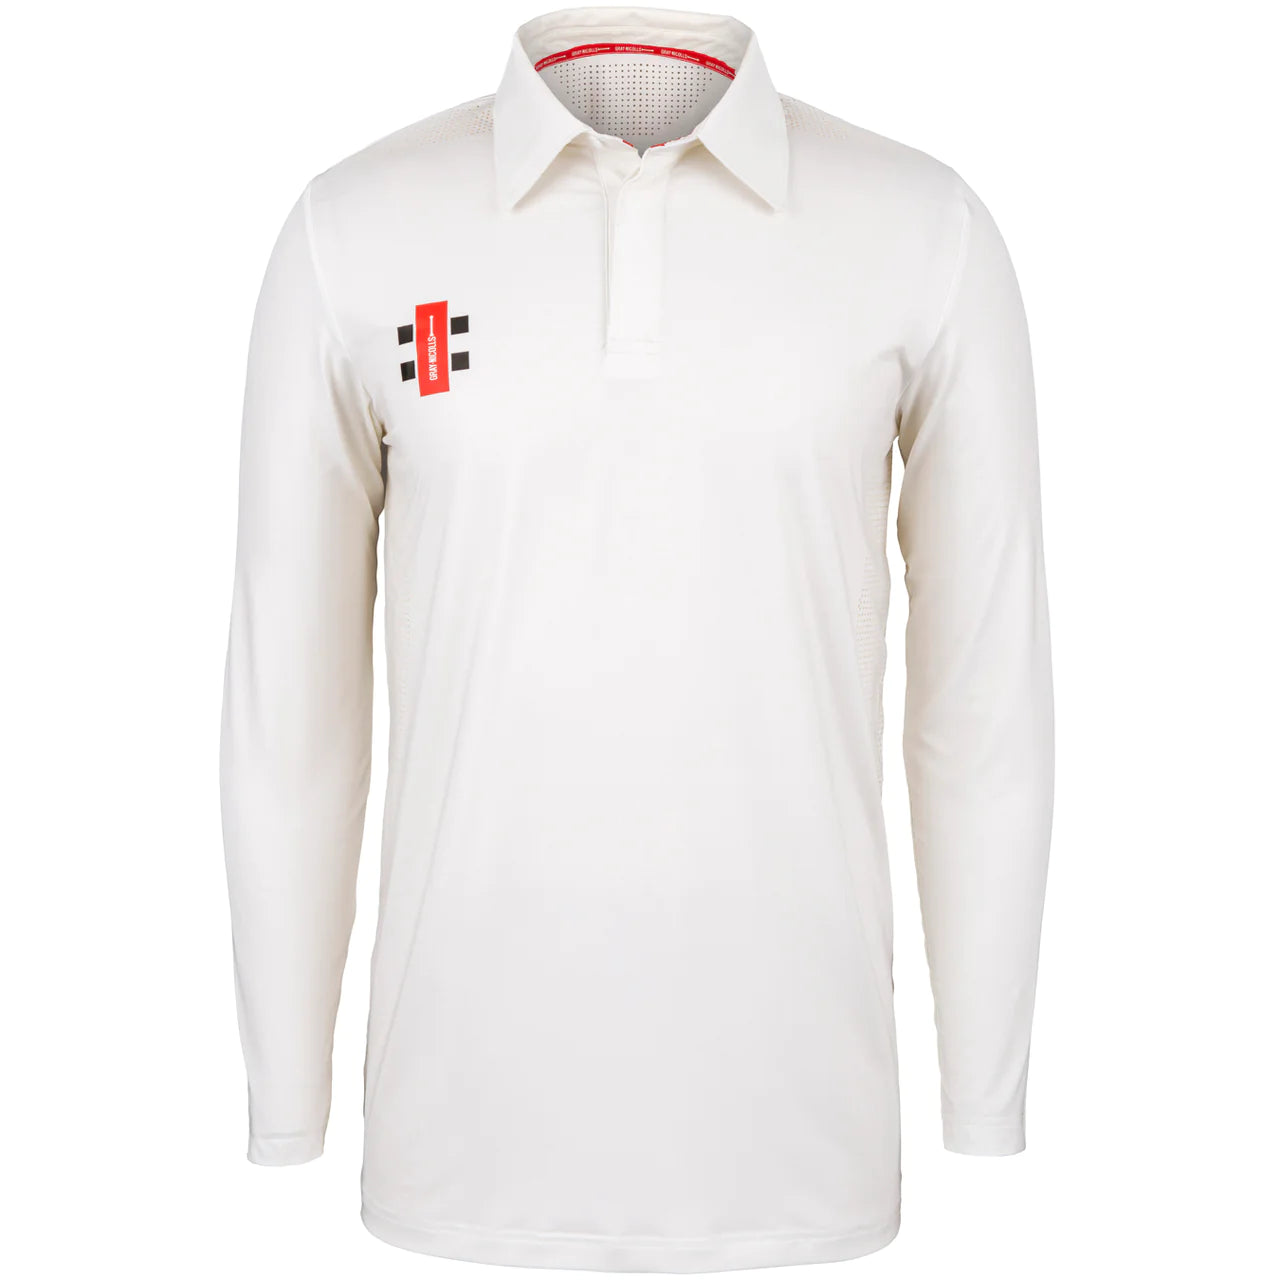 Gray-Nicolls 10 Pro Performance Cricket Long Sleeve Shirt